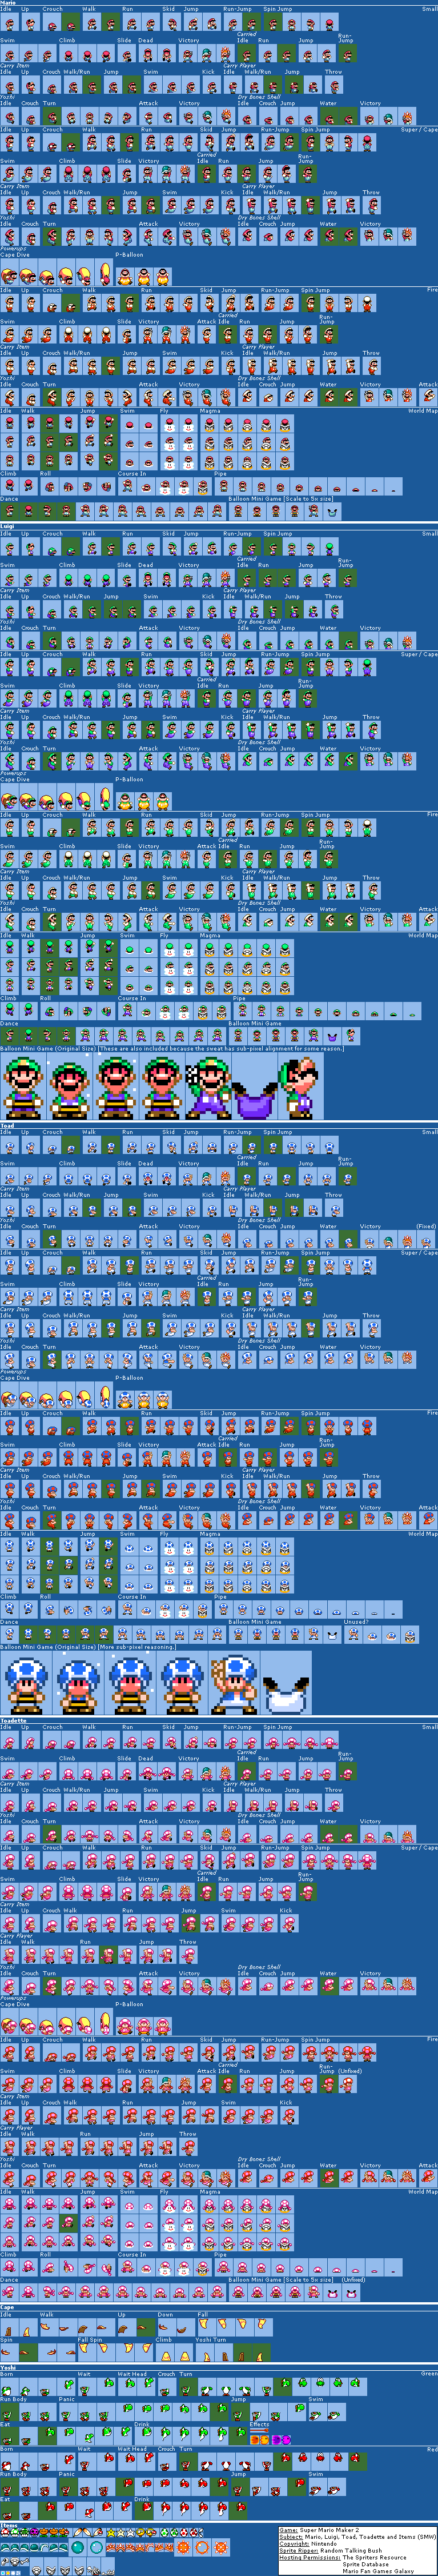 Super Mario Maker 2 - Mario, Luigi, Toad, Toadette and Items (SMW)